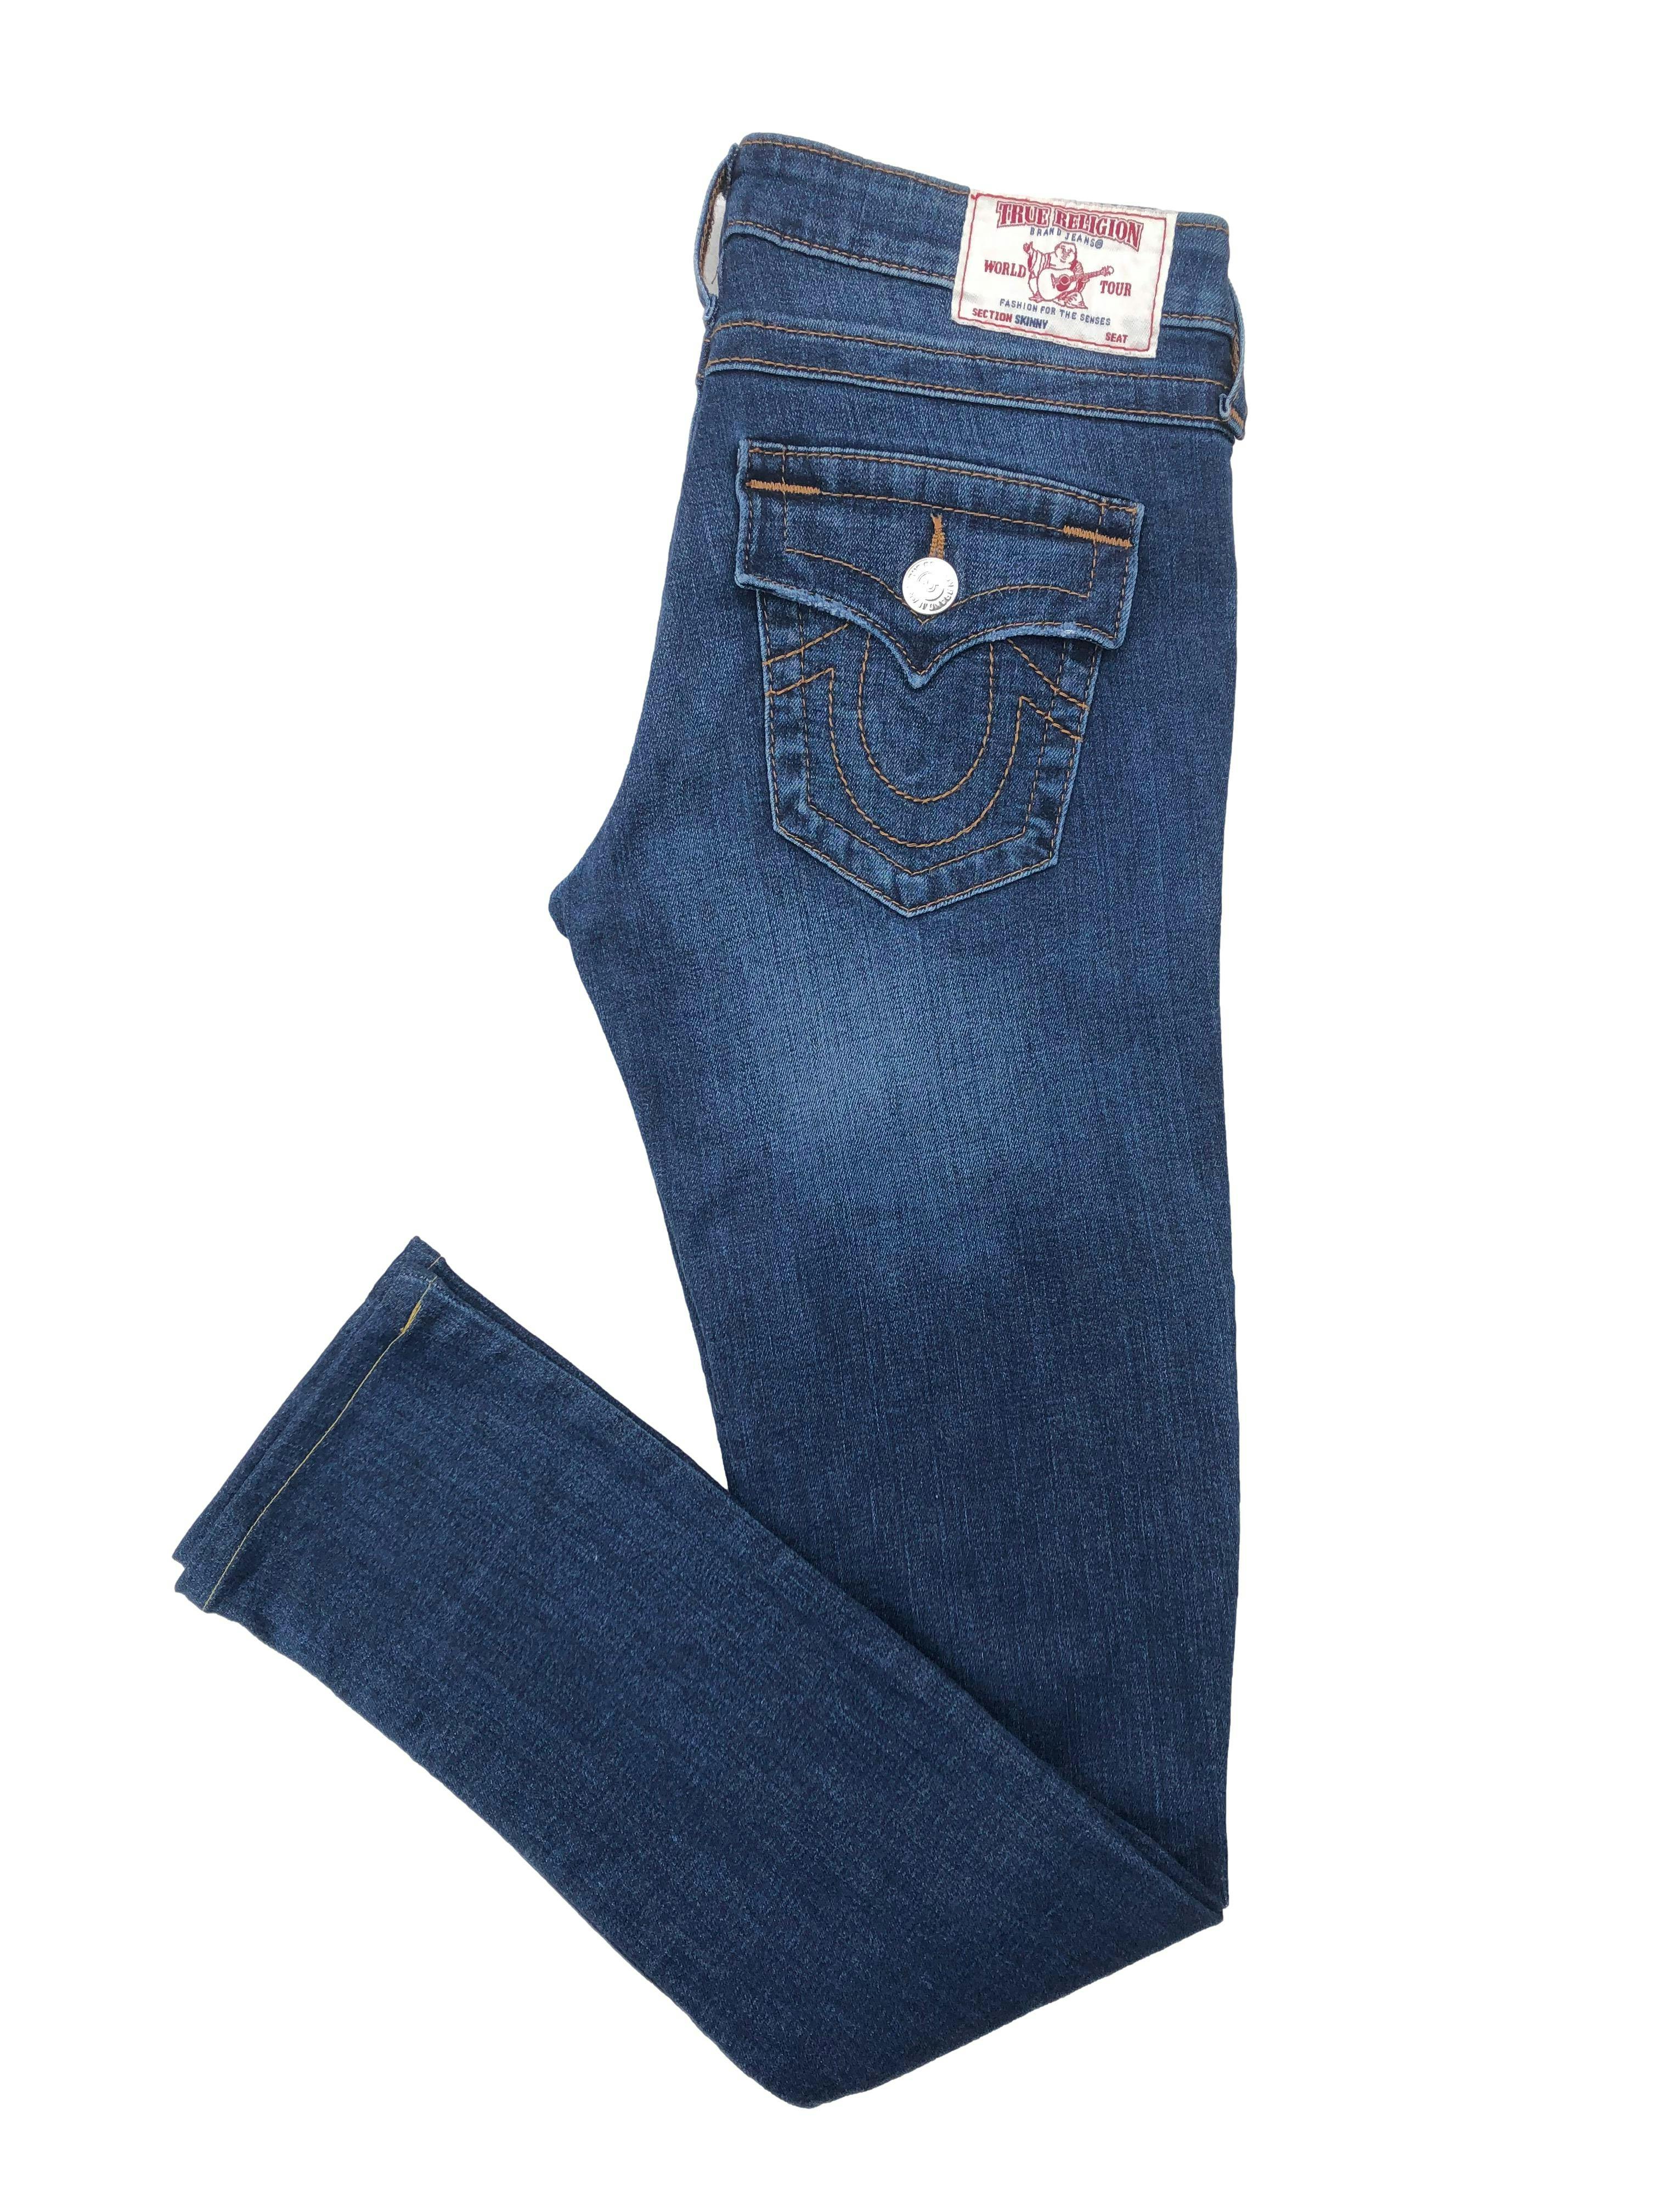 Skinny jean True Religion azul con rasgados y focalizado, Cintura 78cm Tiro 20cm Largo 100cm. Precio original S/ 600